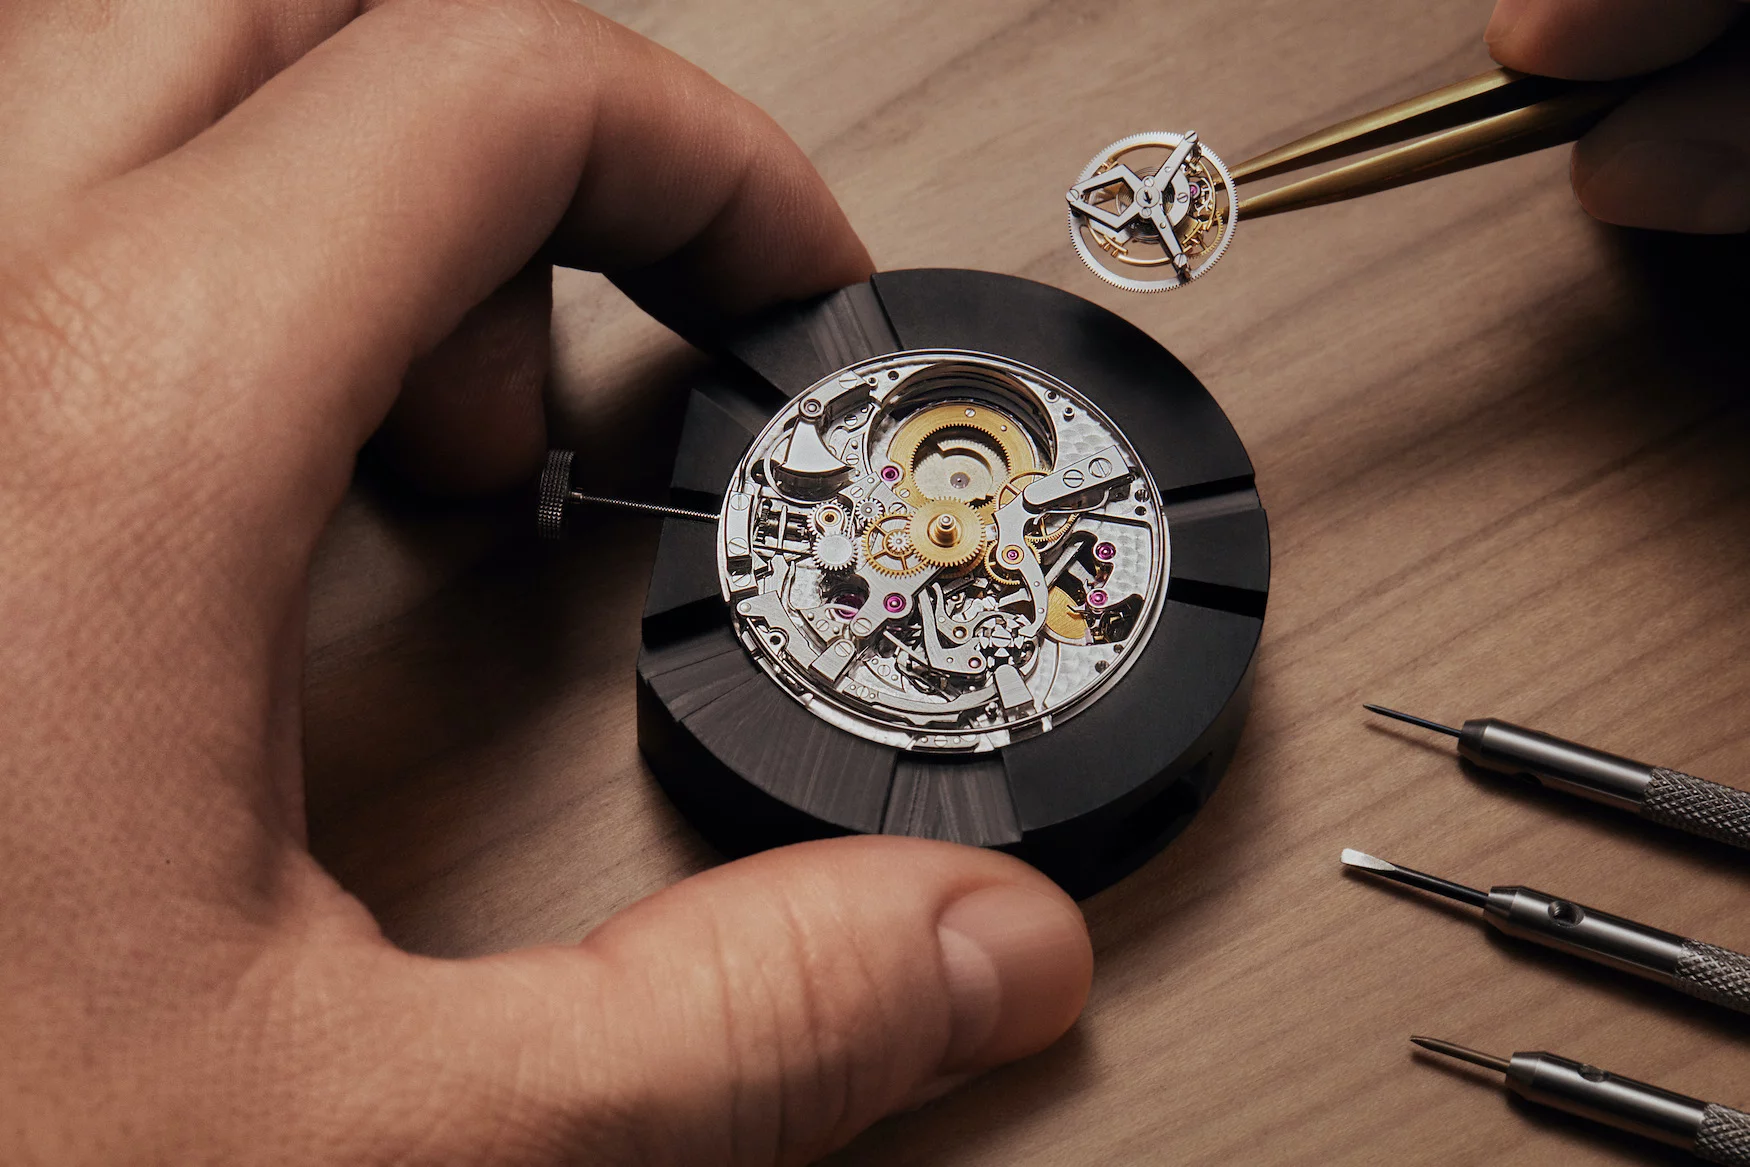 Jean Arnault and Michel Navas on Louis Vuitton Watches - Latest Shows -  WatchBox Studios